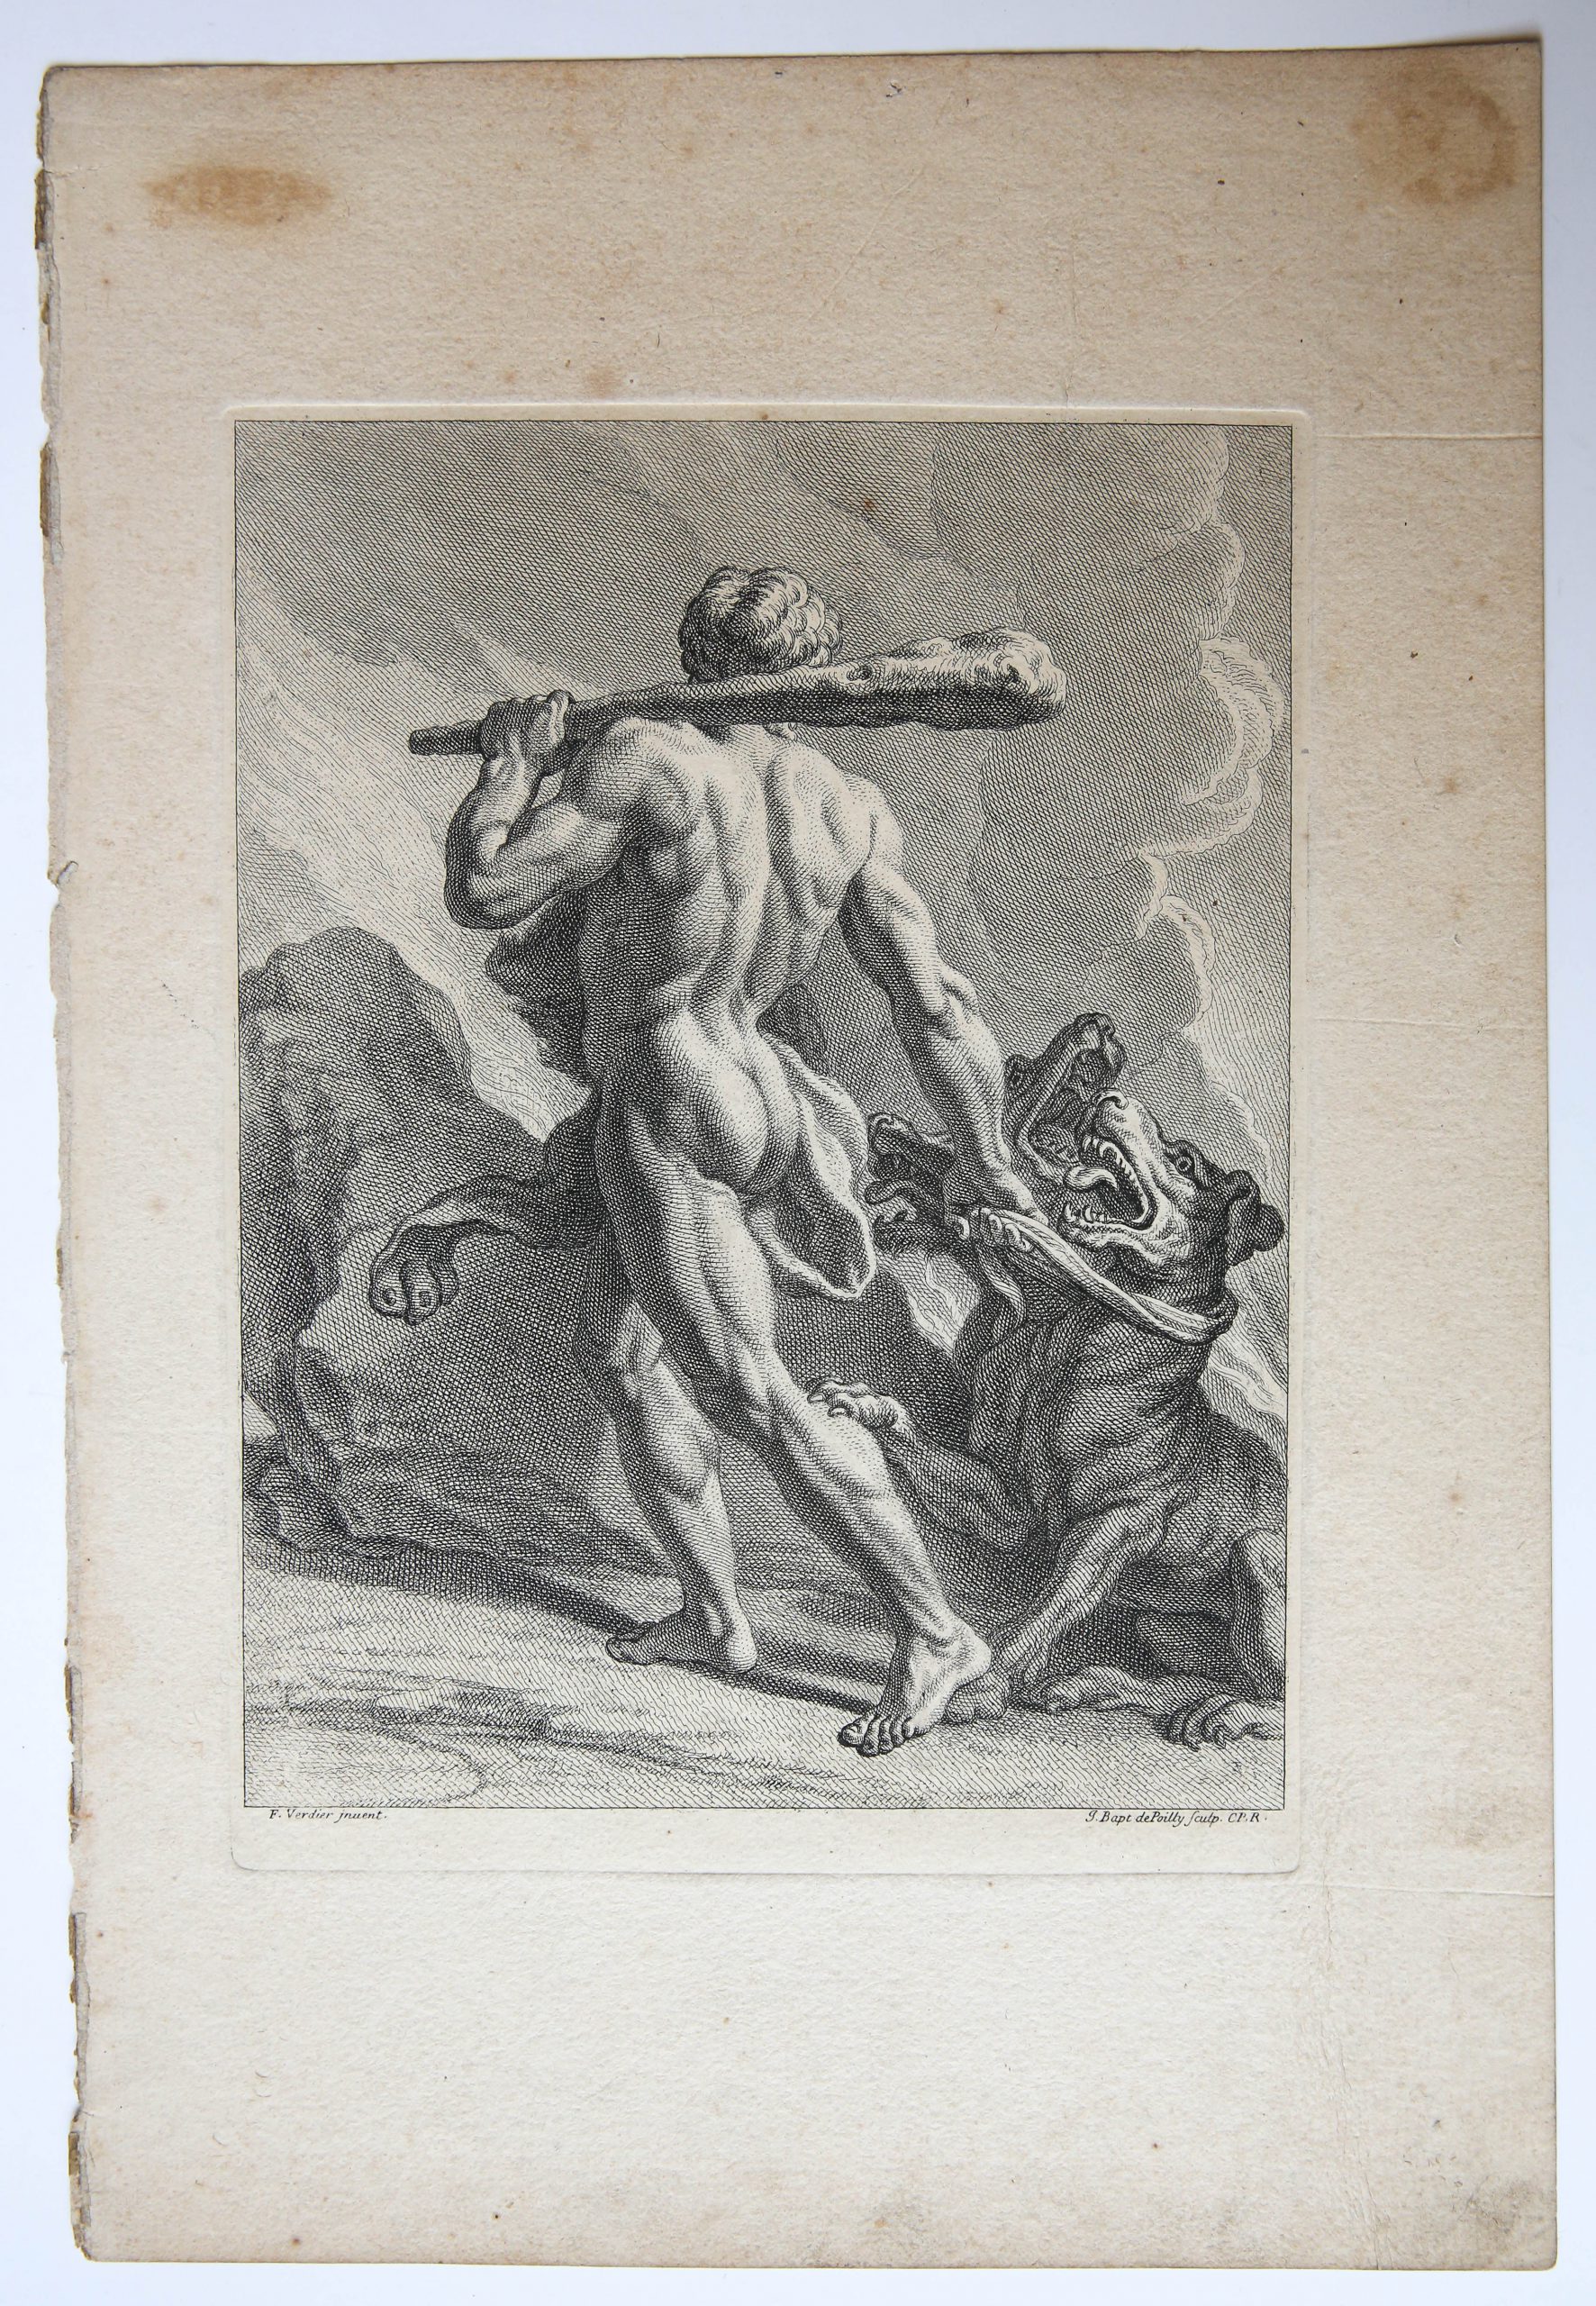 [Antique print, etching/ets] Hercules and Cerberus [mythologie], published ca. 1750.